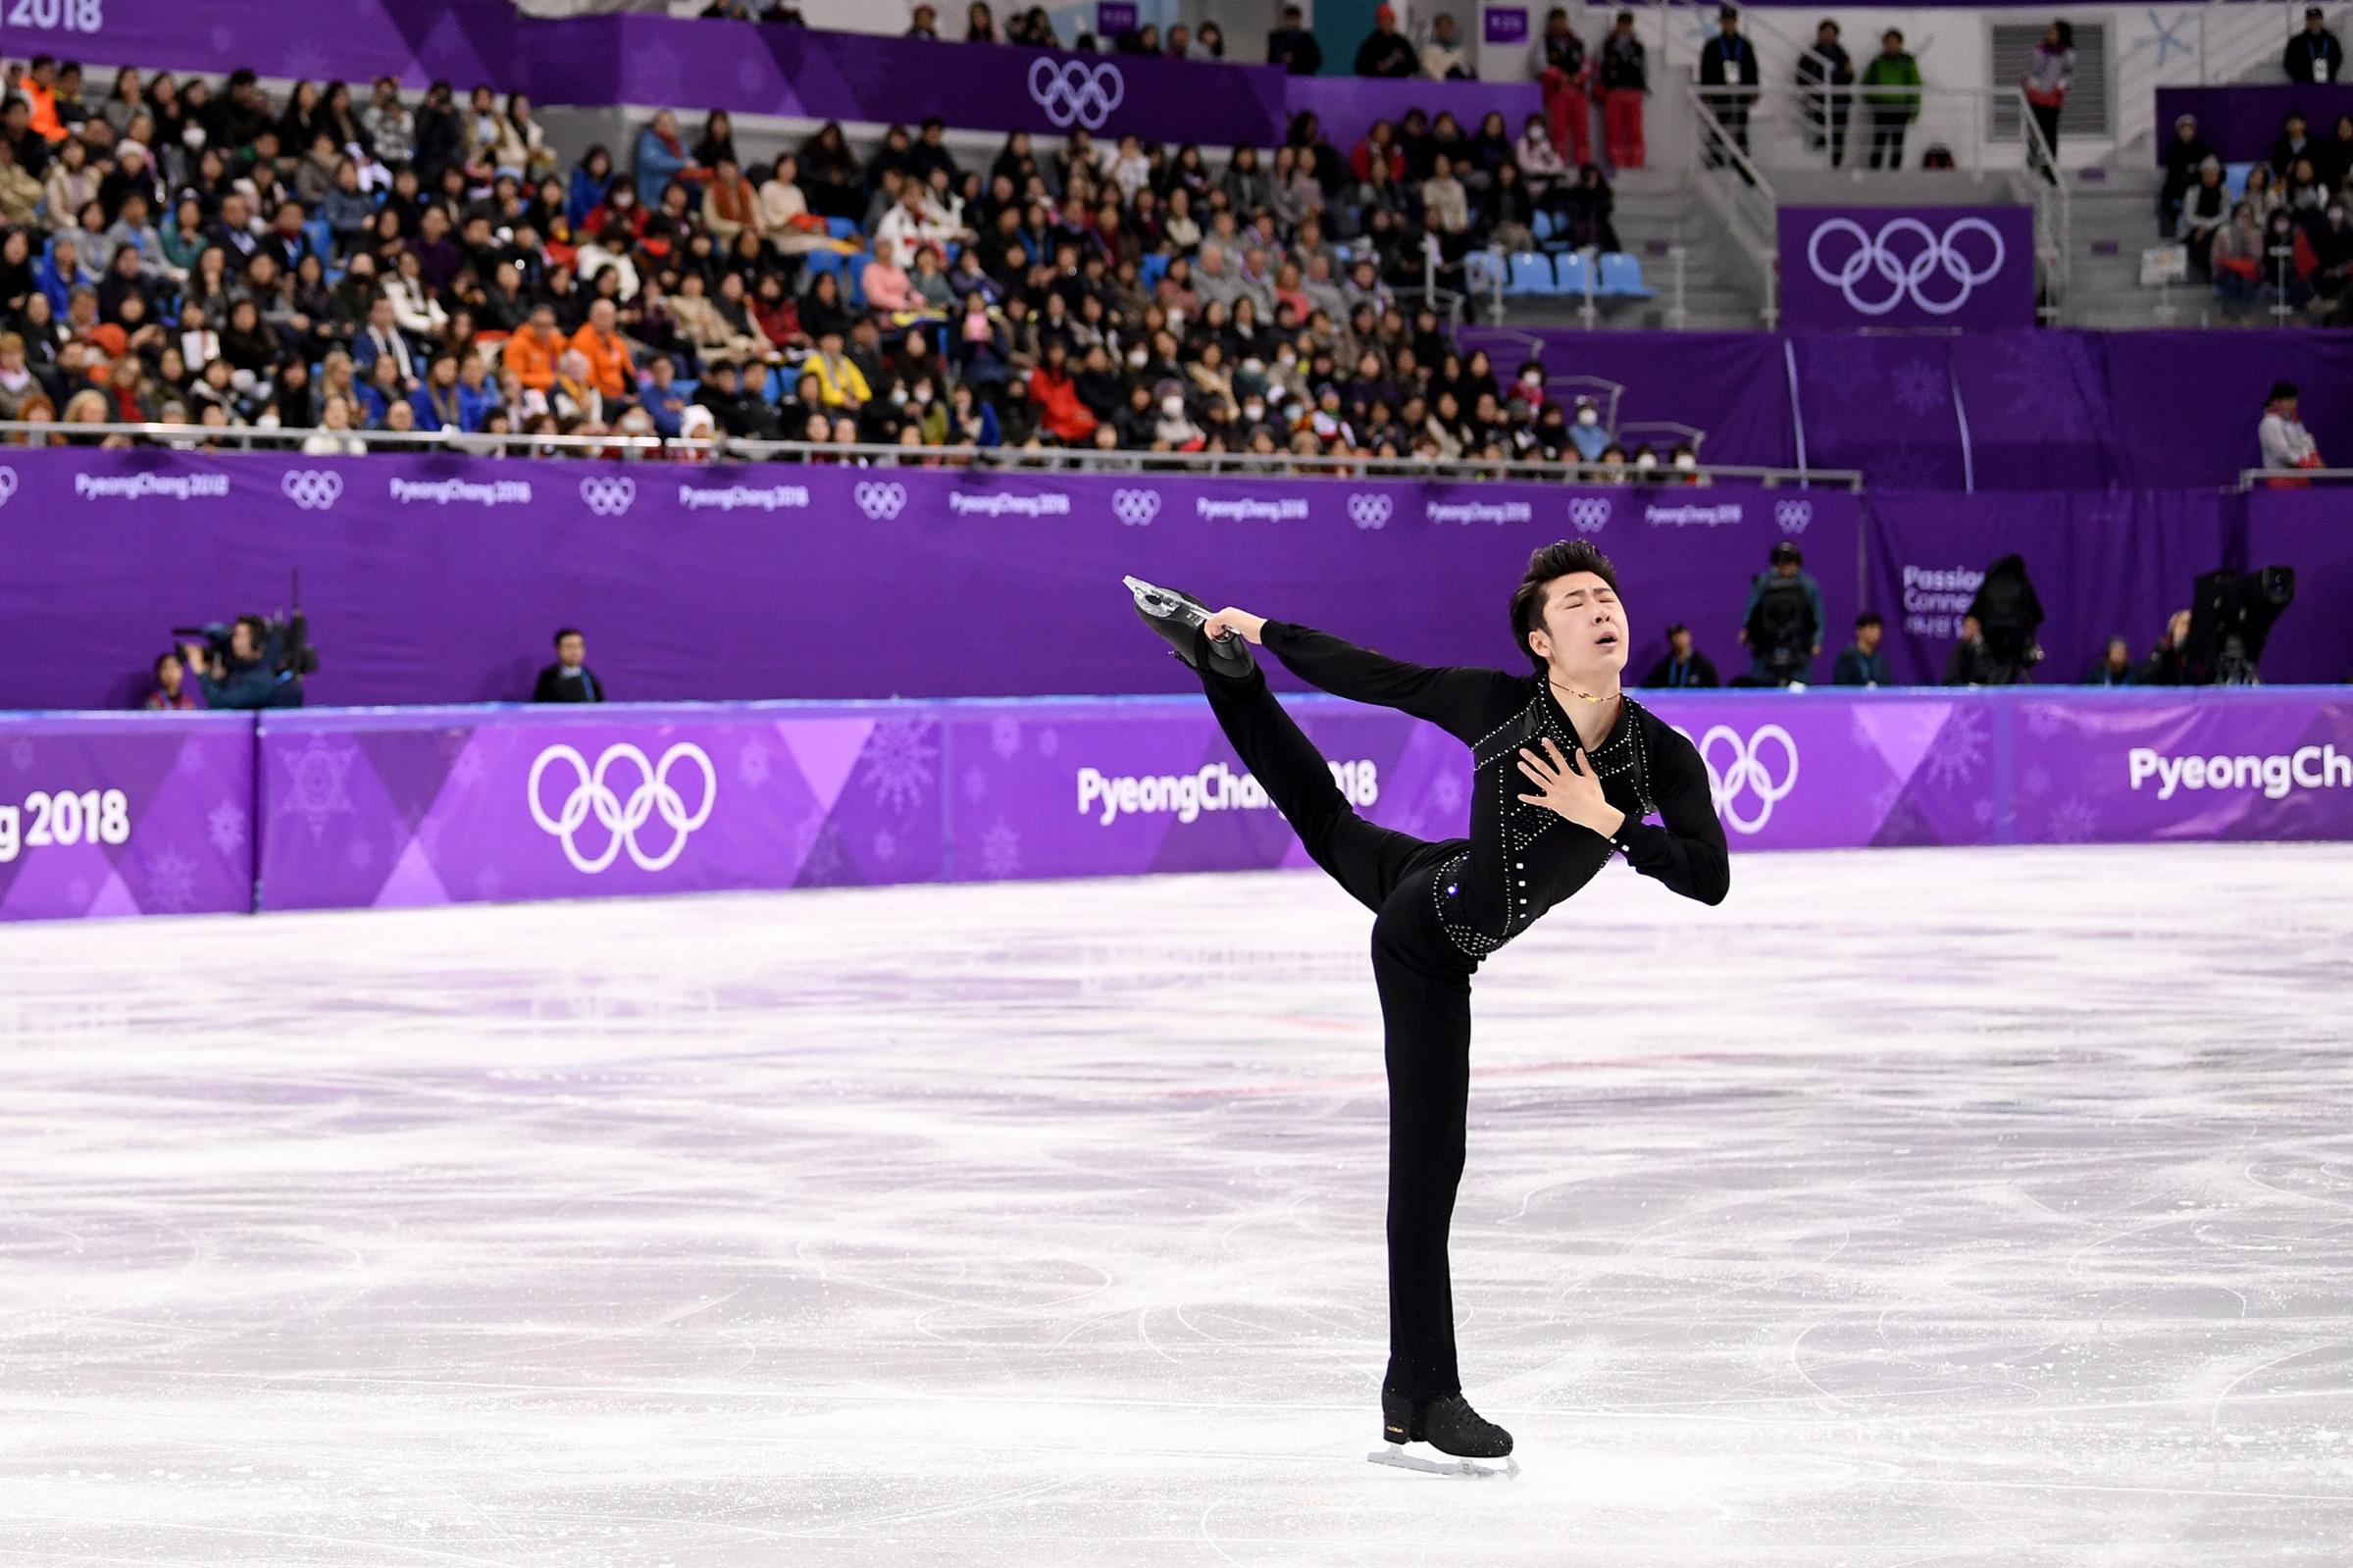 Jin Boyang of China competes during the Men's Single Skating Short Program at Gangneung Ice Arena on Feb. 16, 2018 in Gangneung, South Korea.